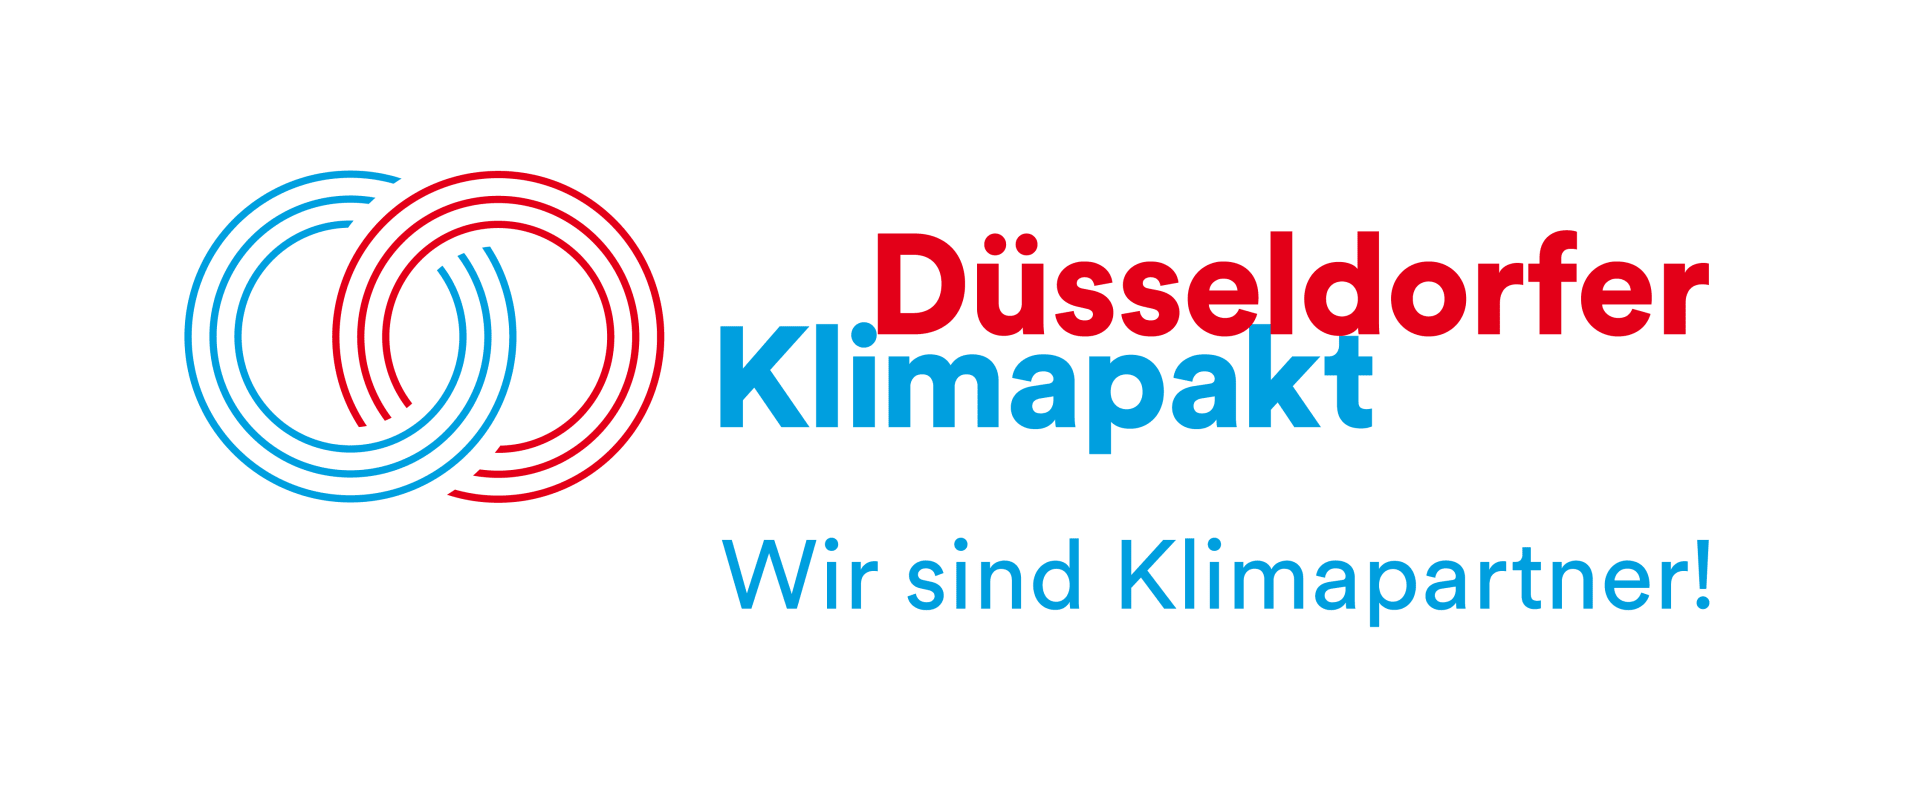 Düsseldorfer Klimapakt